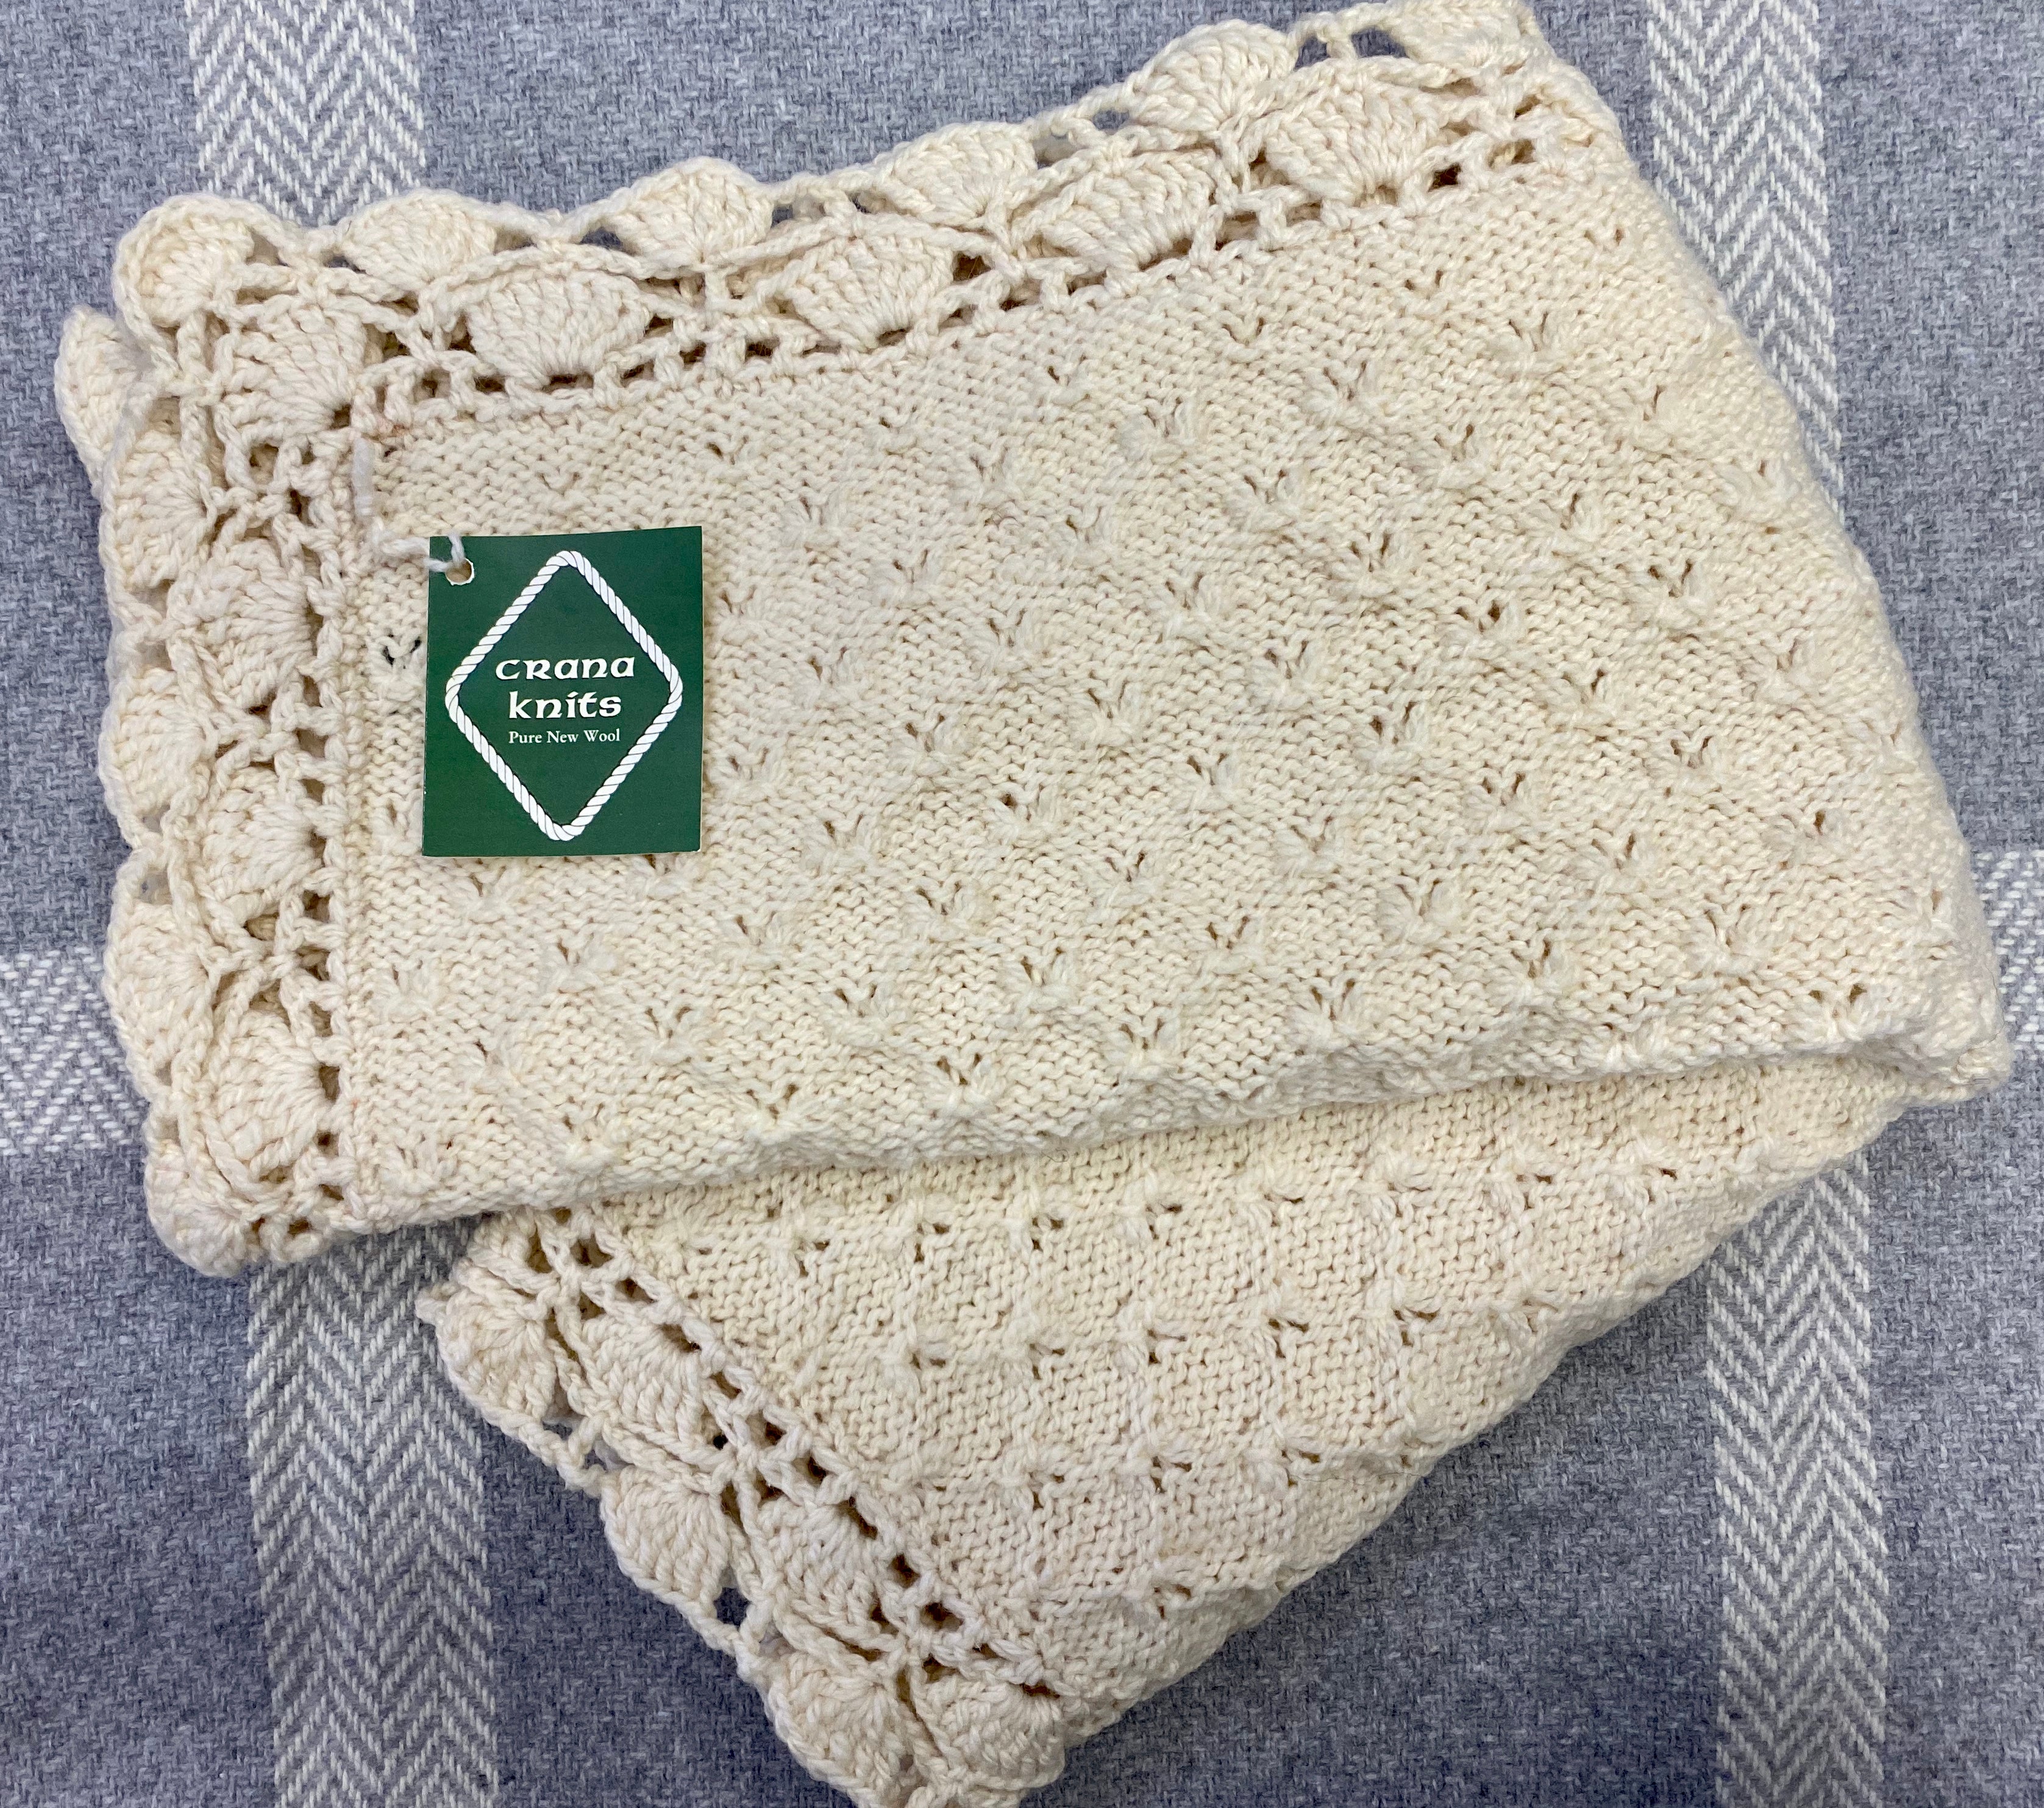 Hand knit baby blanket by CranaKnits